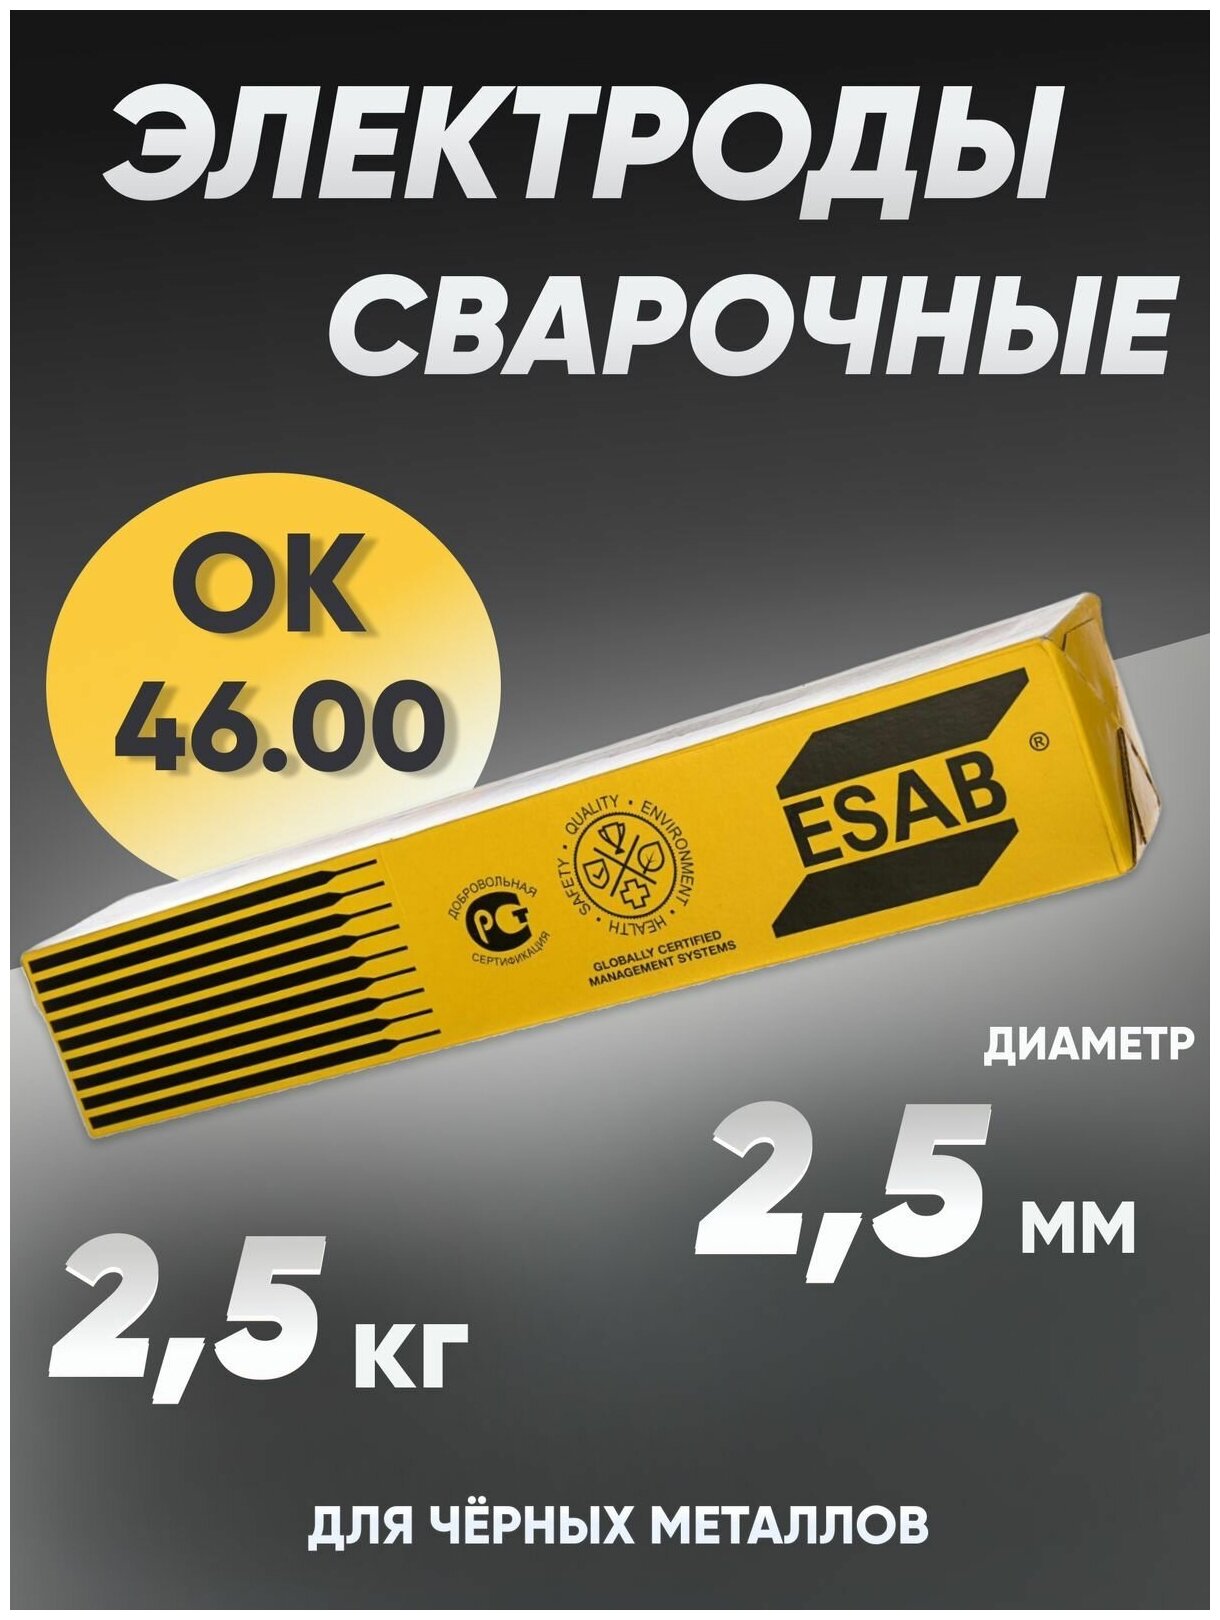 Электроды для сварки 2,5 мм, сварочные электроды Esab ОК-46 2,5 кг